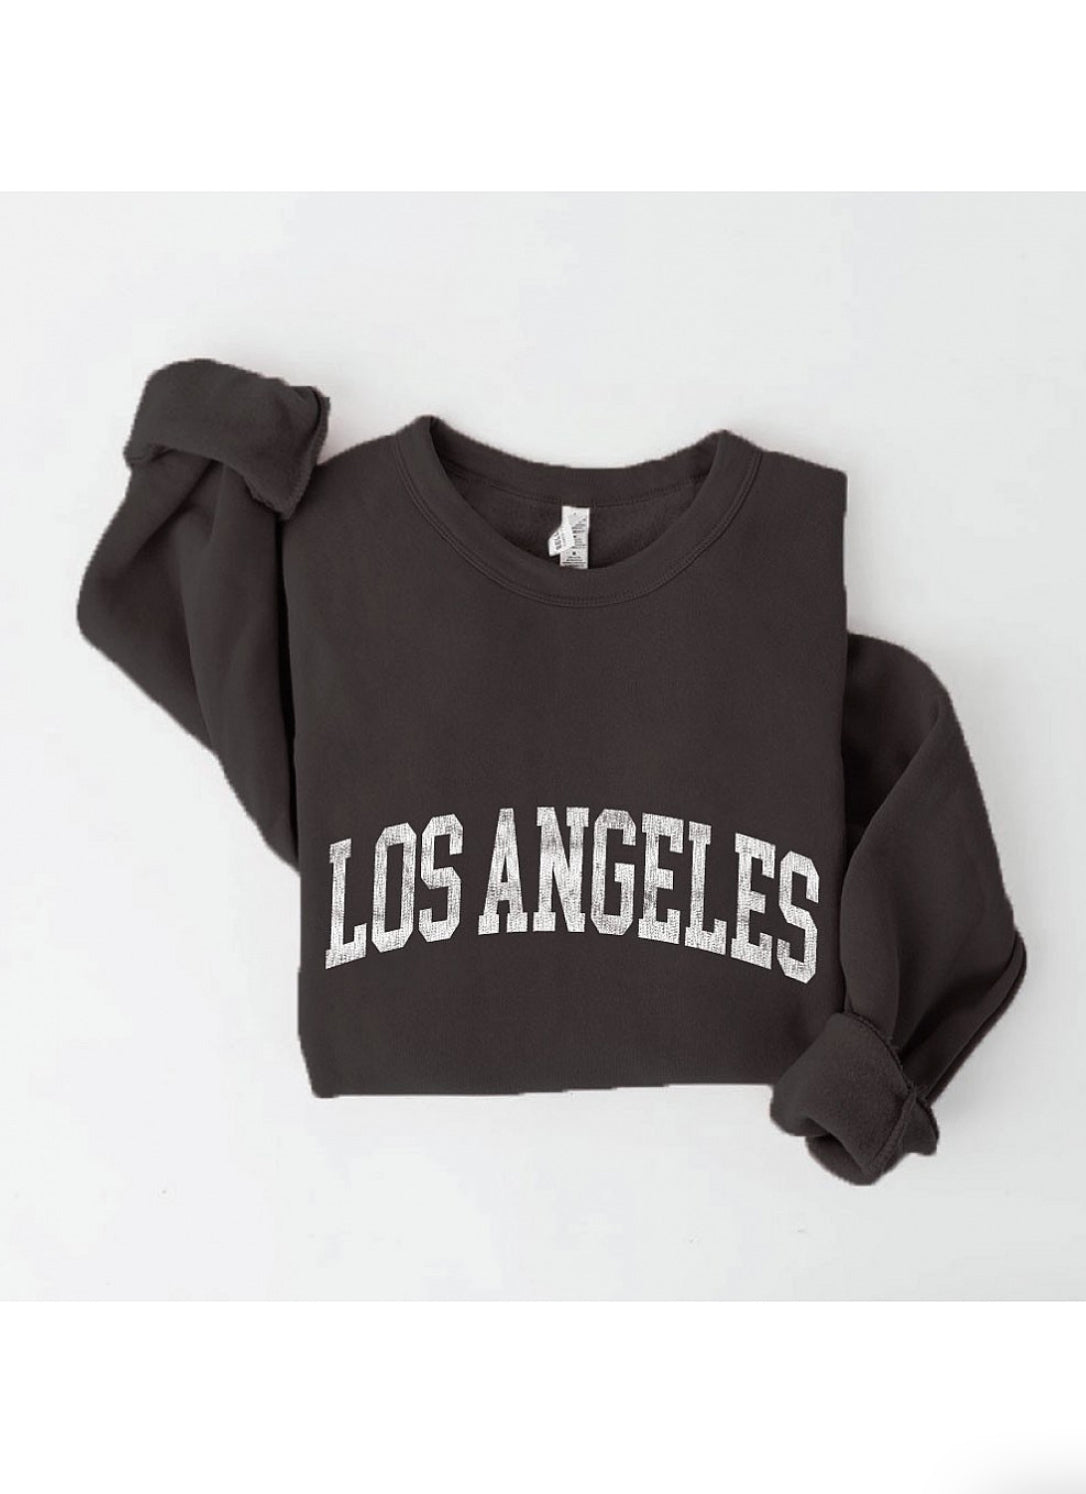 LOS ANGELES Sweatshirt, Two Colors